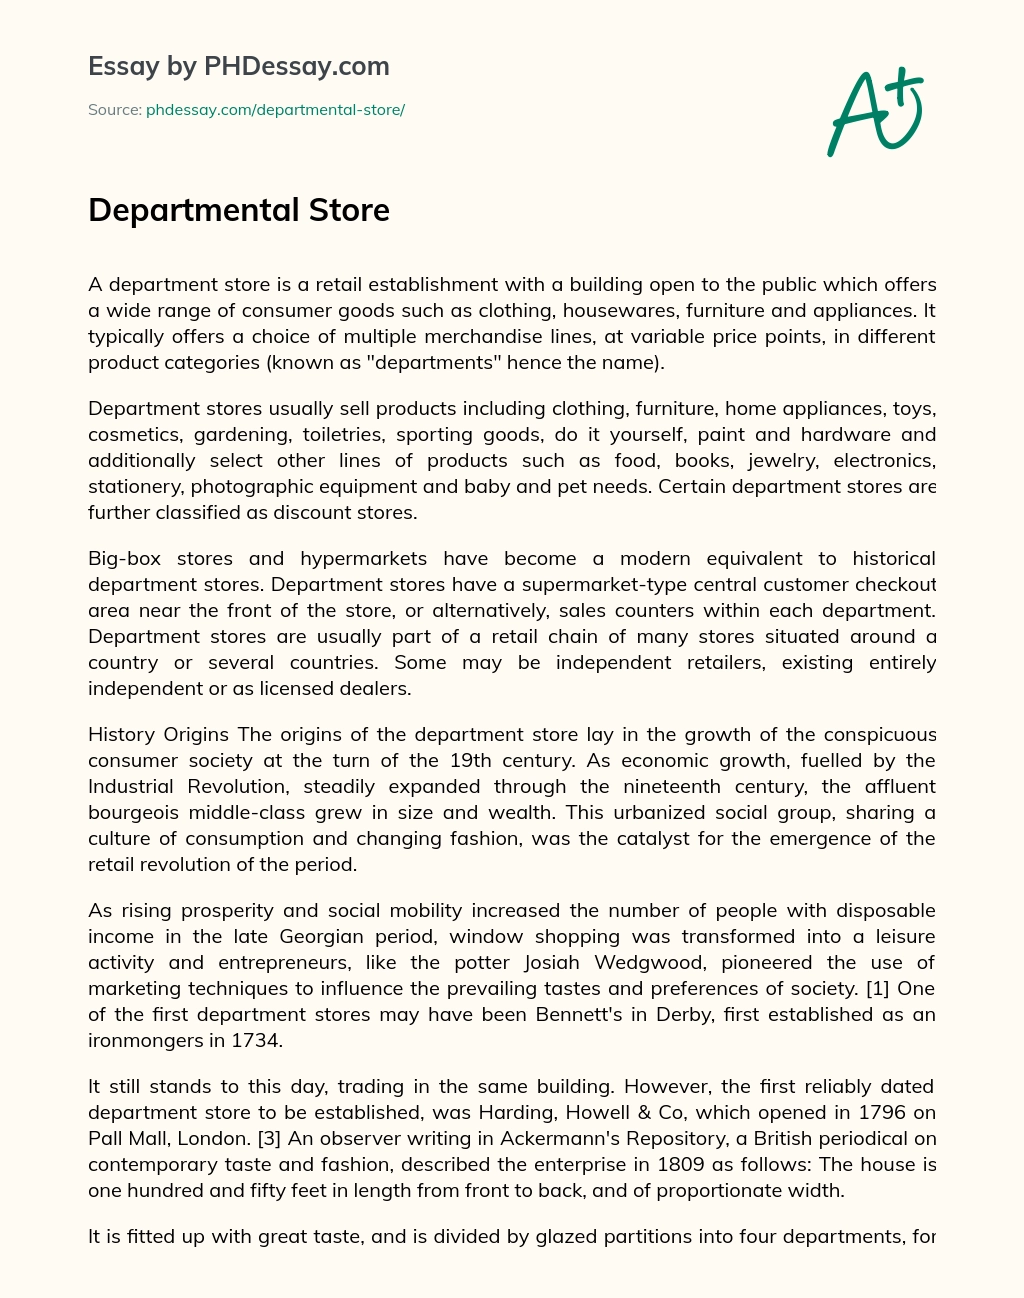 Departmental Store essay